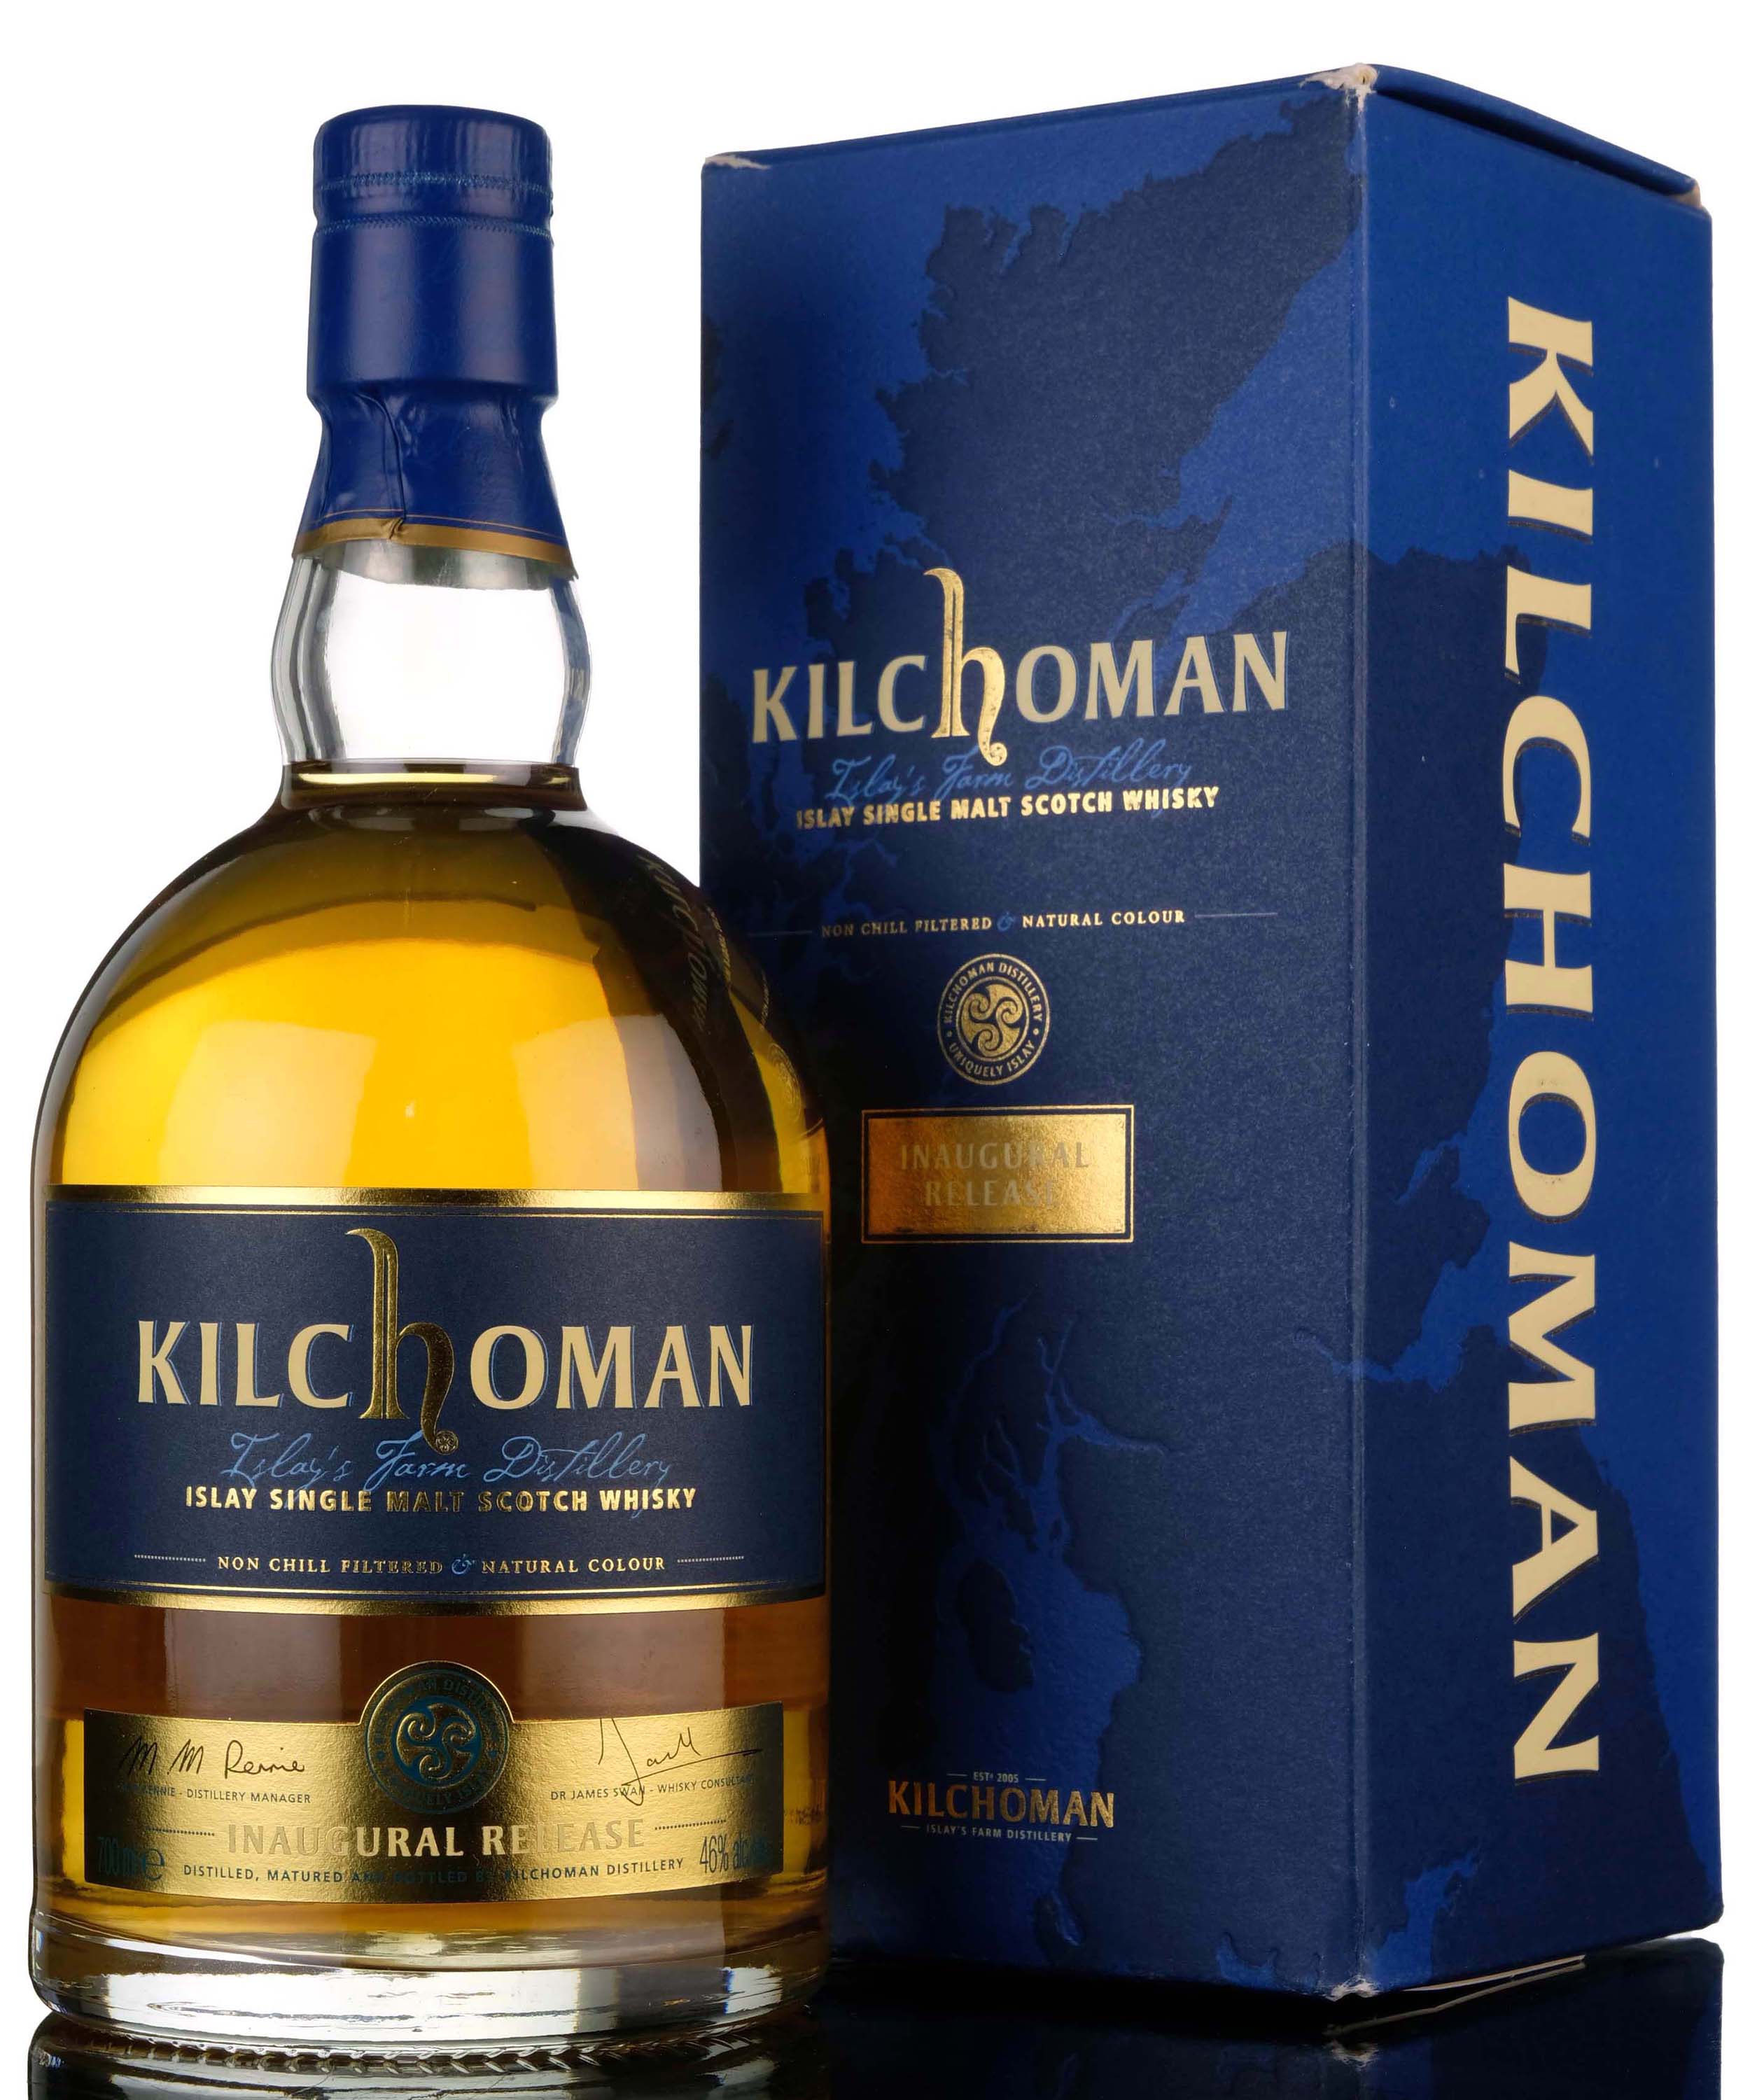 Kilchoman Inaugural Release 2009